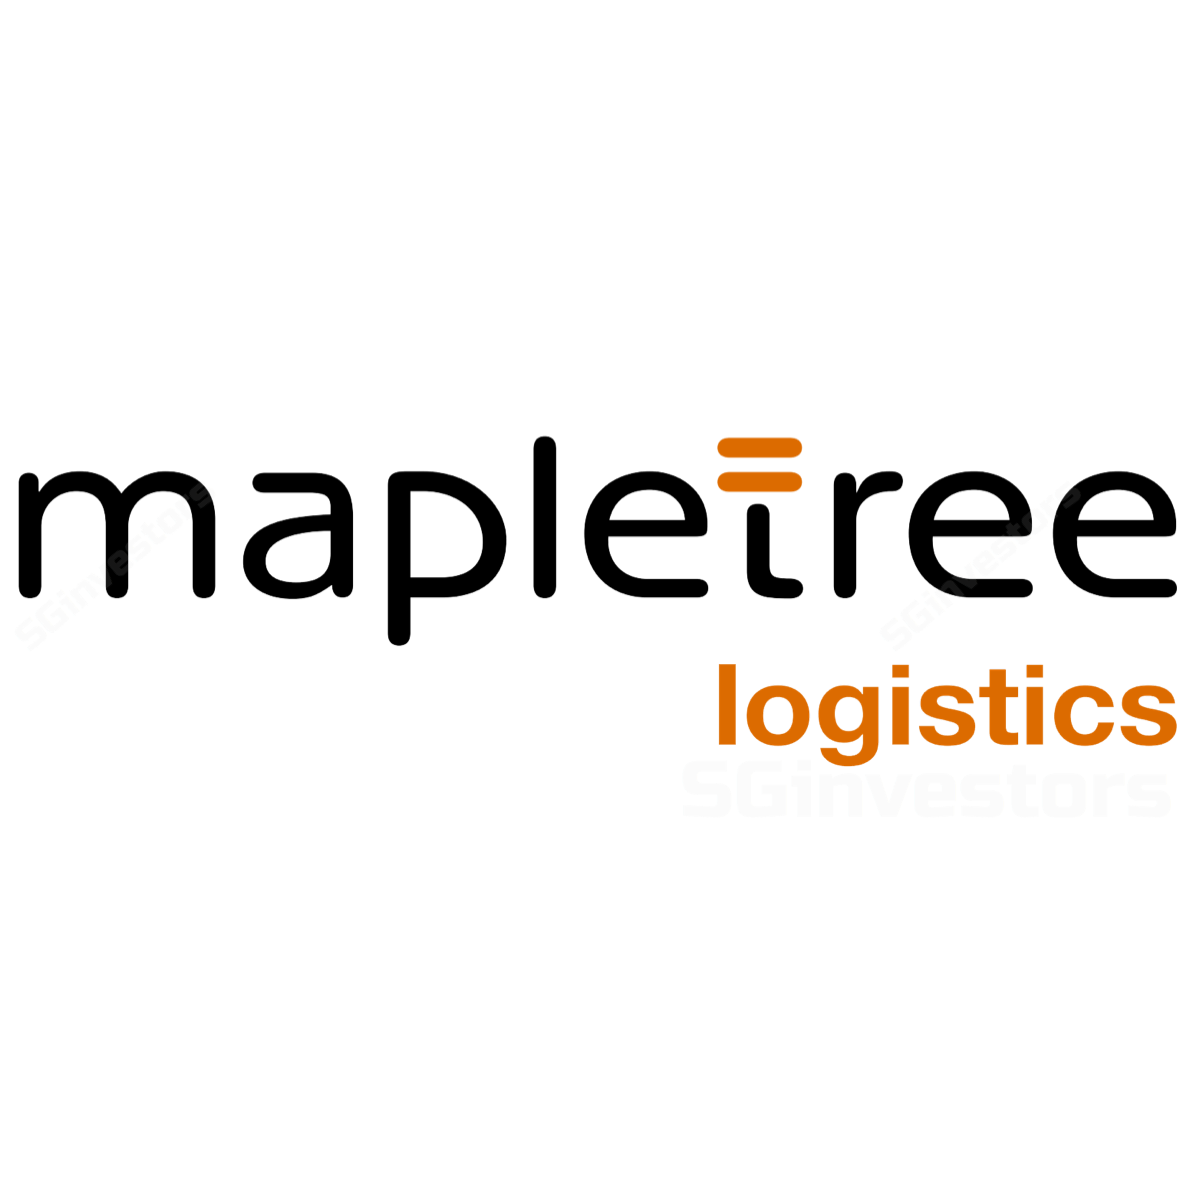 Mapletree Logistics Trust (MLT SP) - Maybank Kim Eng 2017-04-18: Headwinds From Oversupply